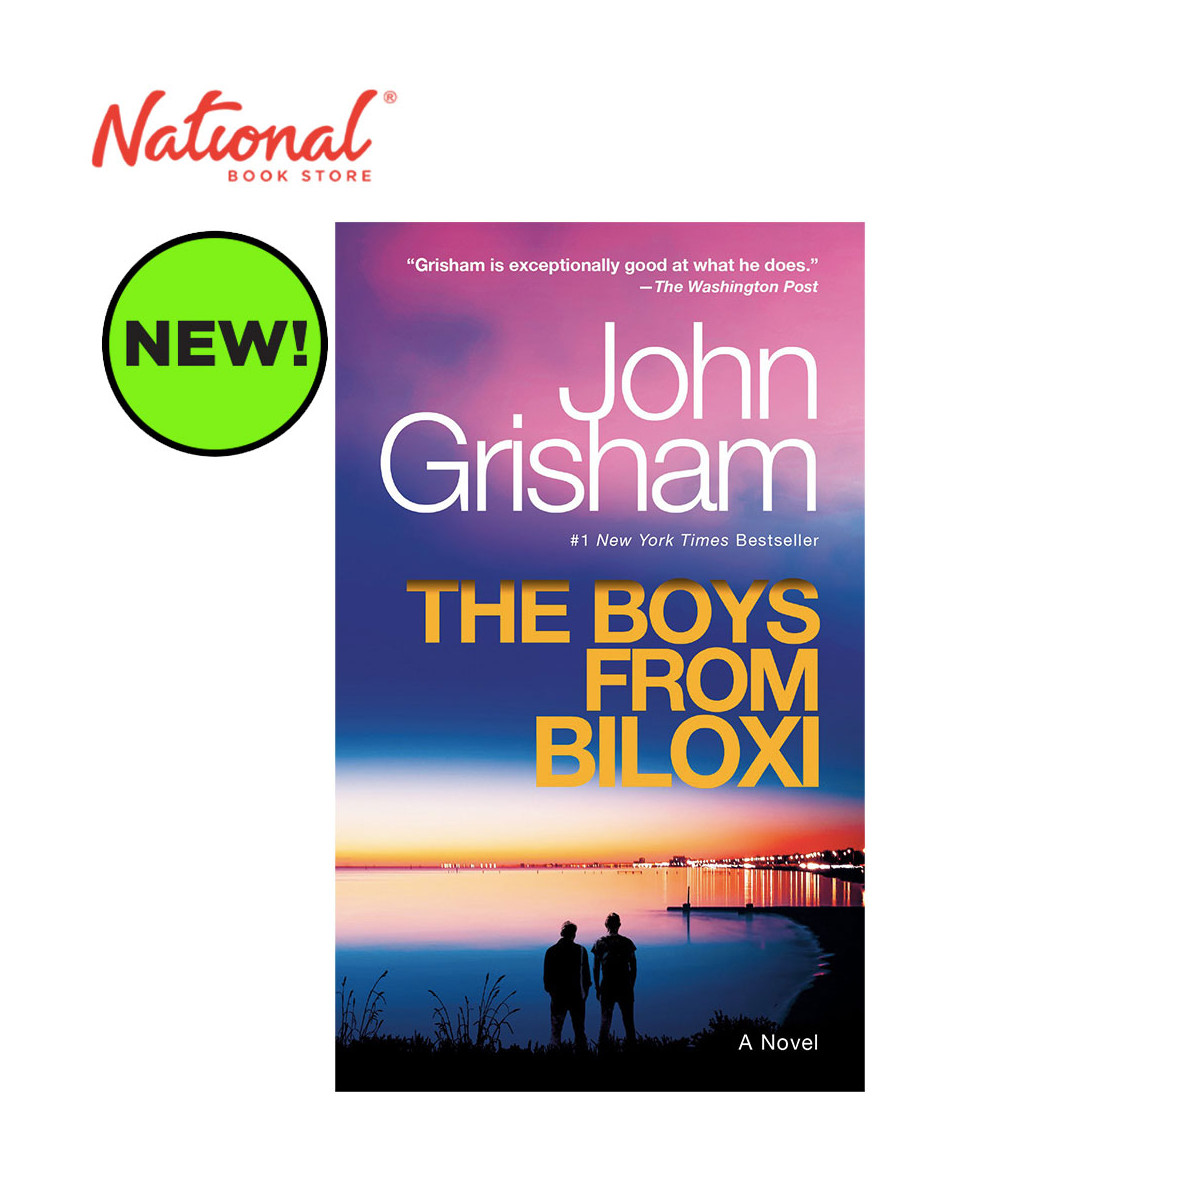 The Boys From Biloxi by John Grisham - Trade Paperback - Thriller, Mystery & Suspense